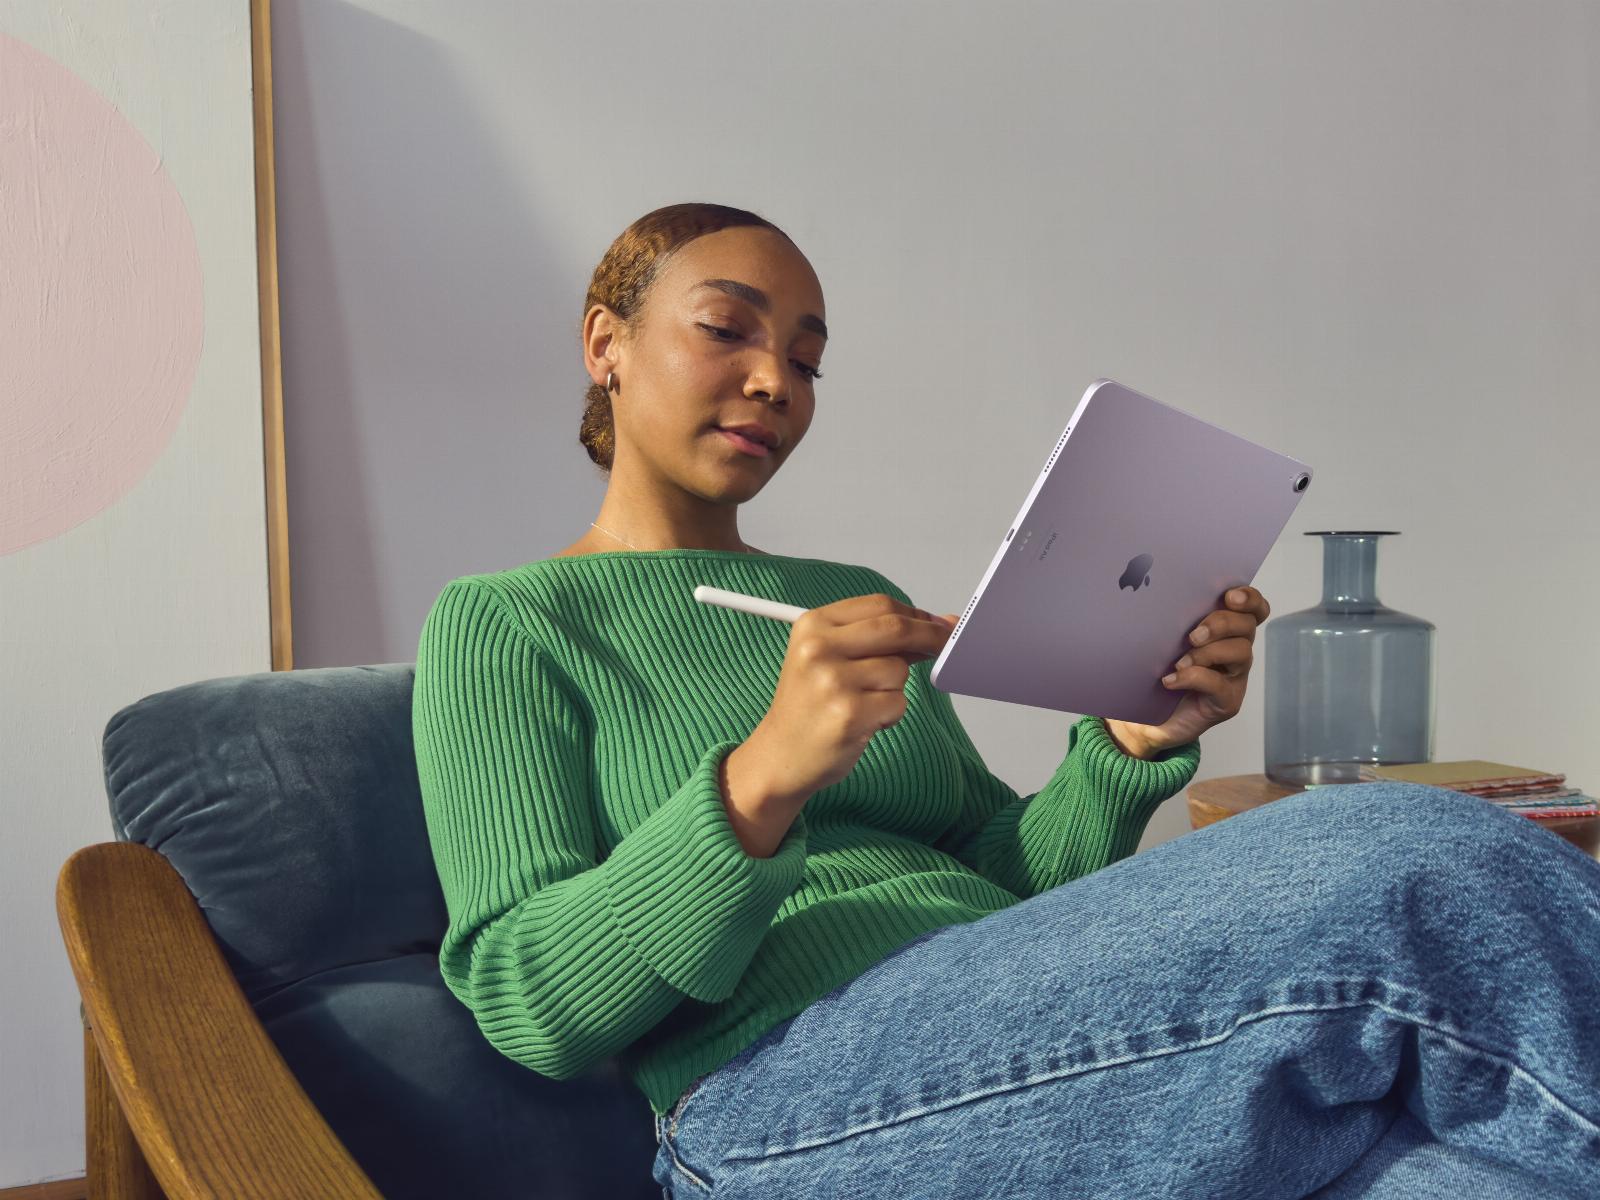 Here’s Apple’s new iPad lineup